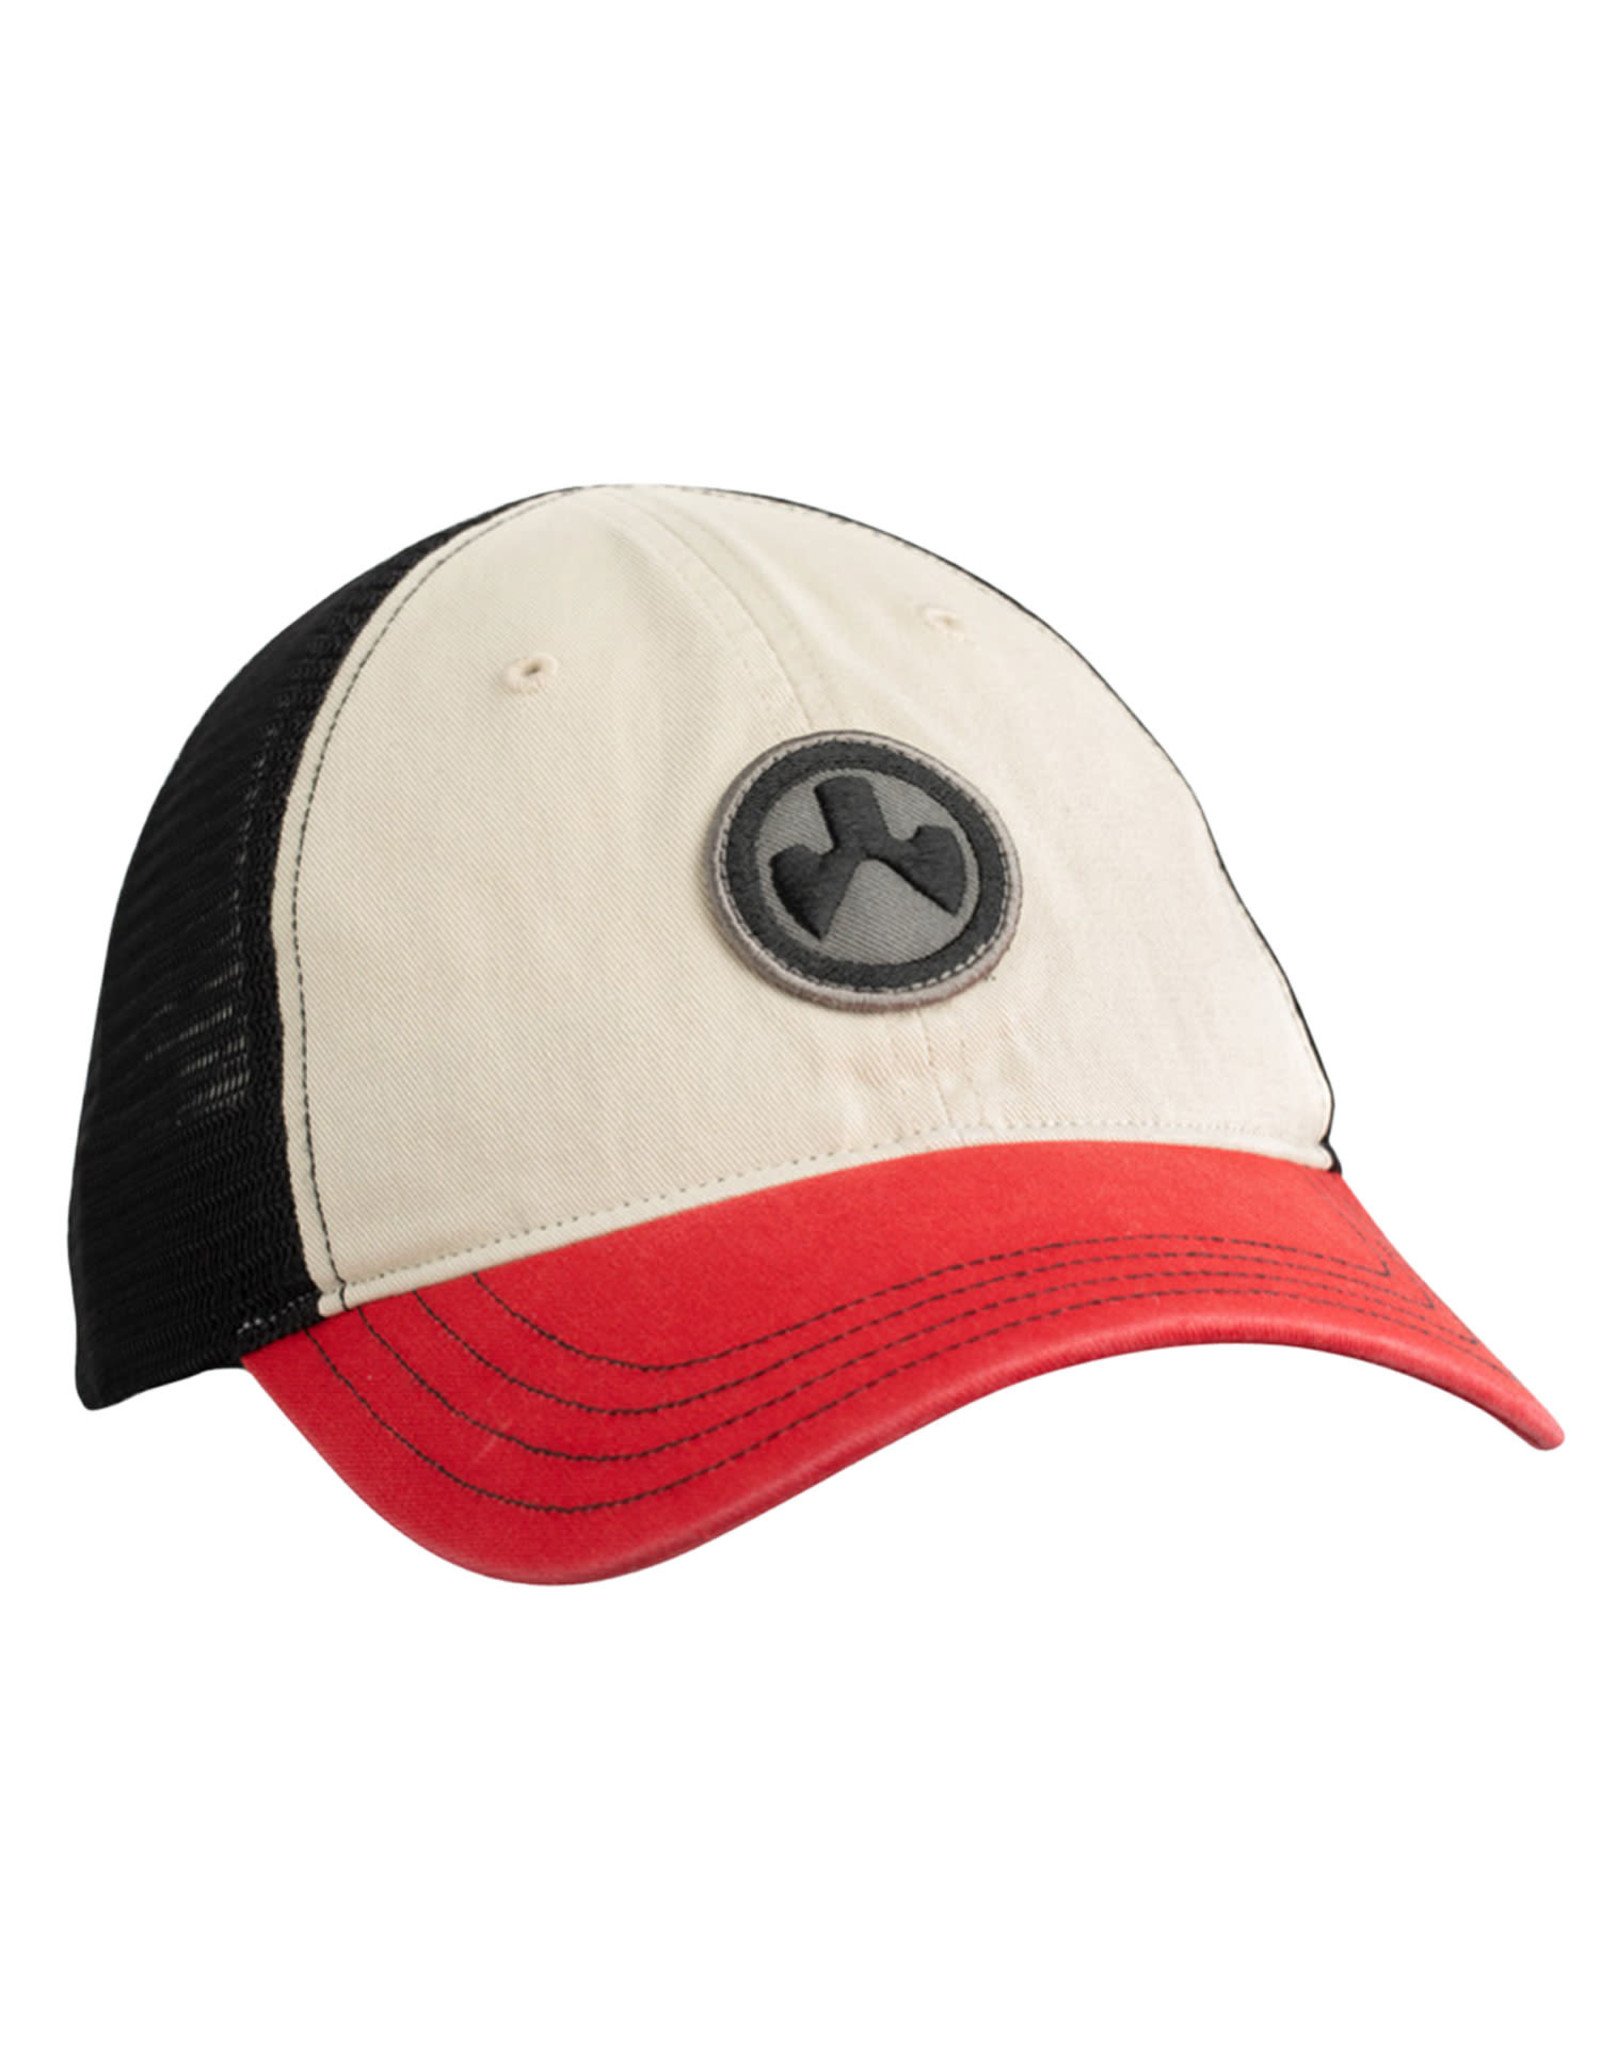 Magpul Red Bill Trucker Hat